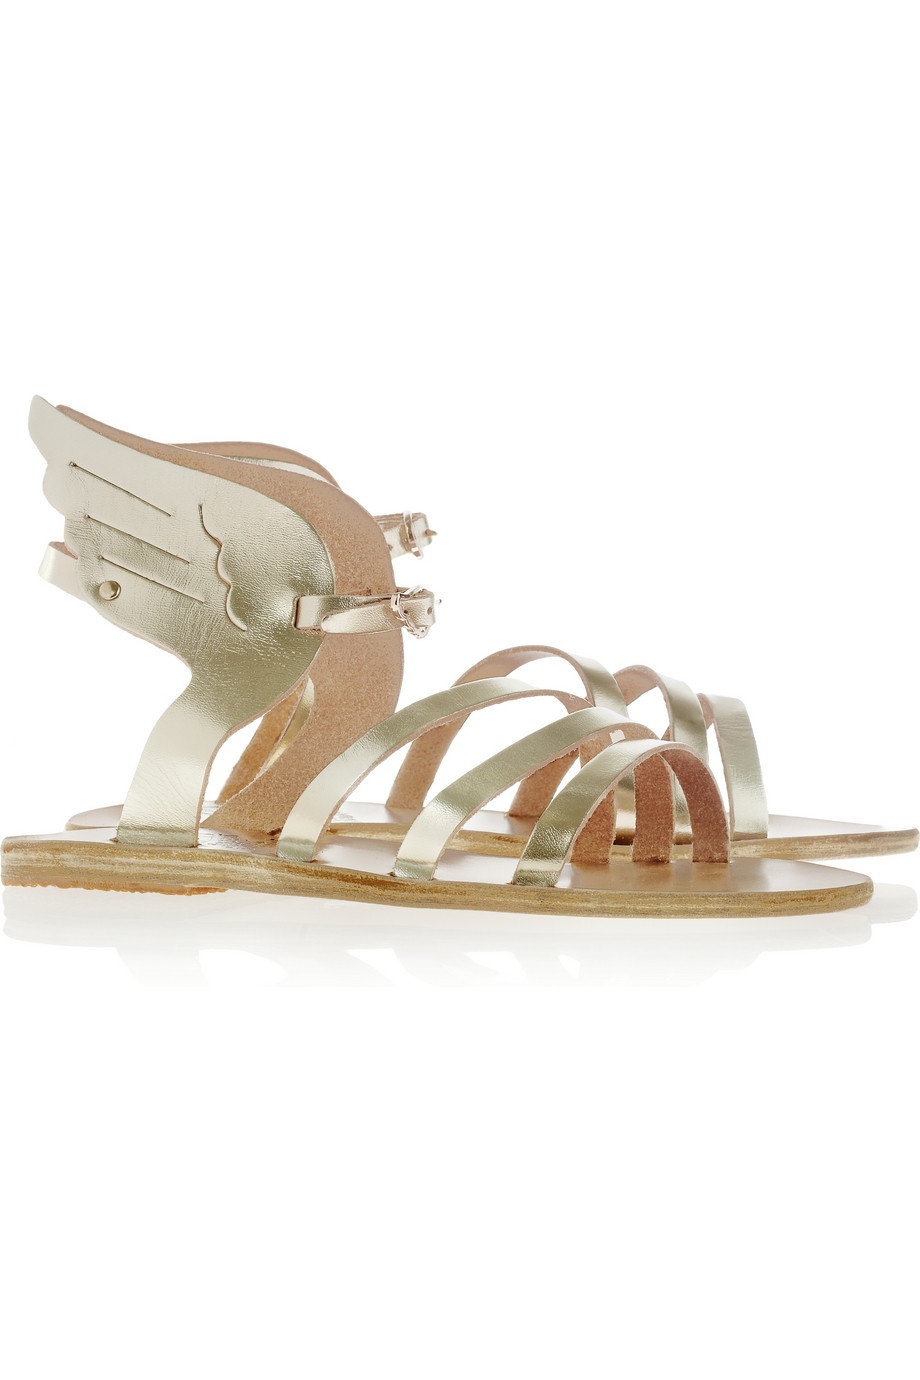 ancient-greek-sandals-gold-ikaria-metallic-leather-wing-sandals ...